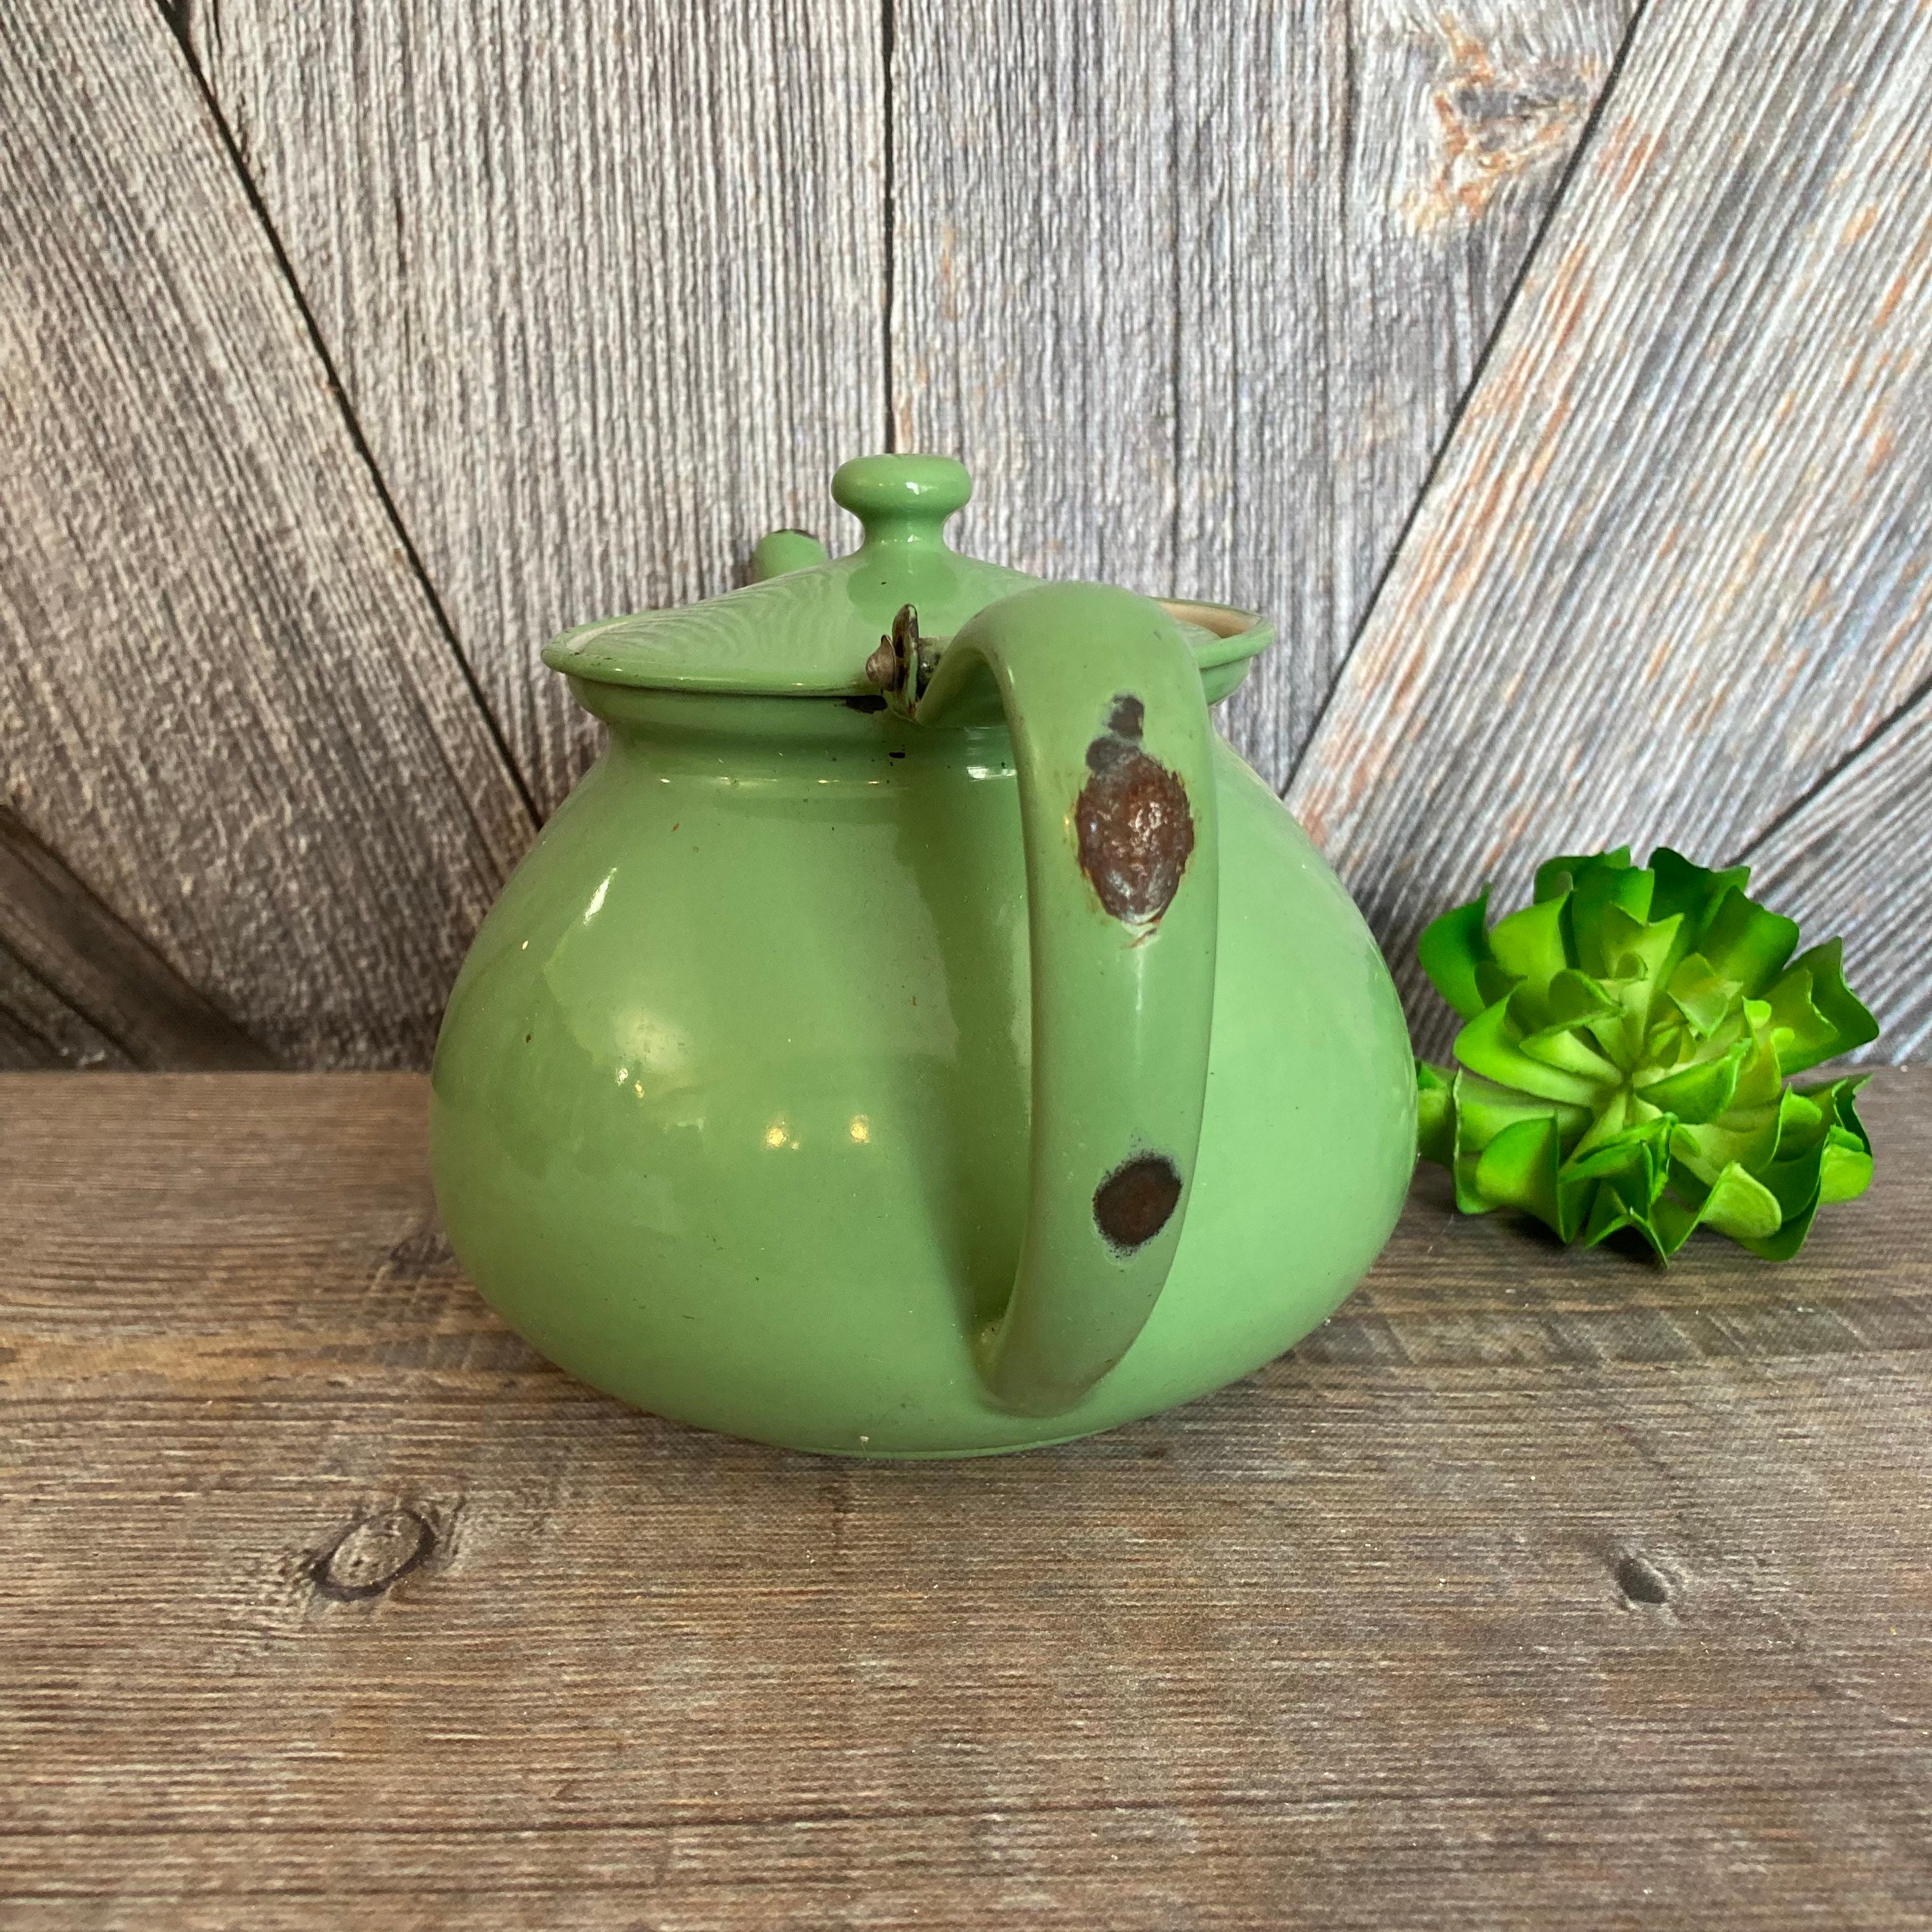 Retro 60s / 70s Green Enamel Circle pattern tea kettle